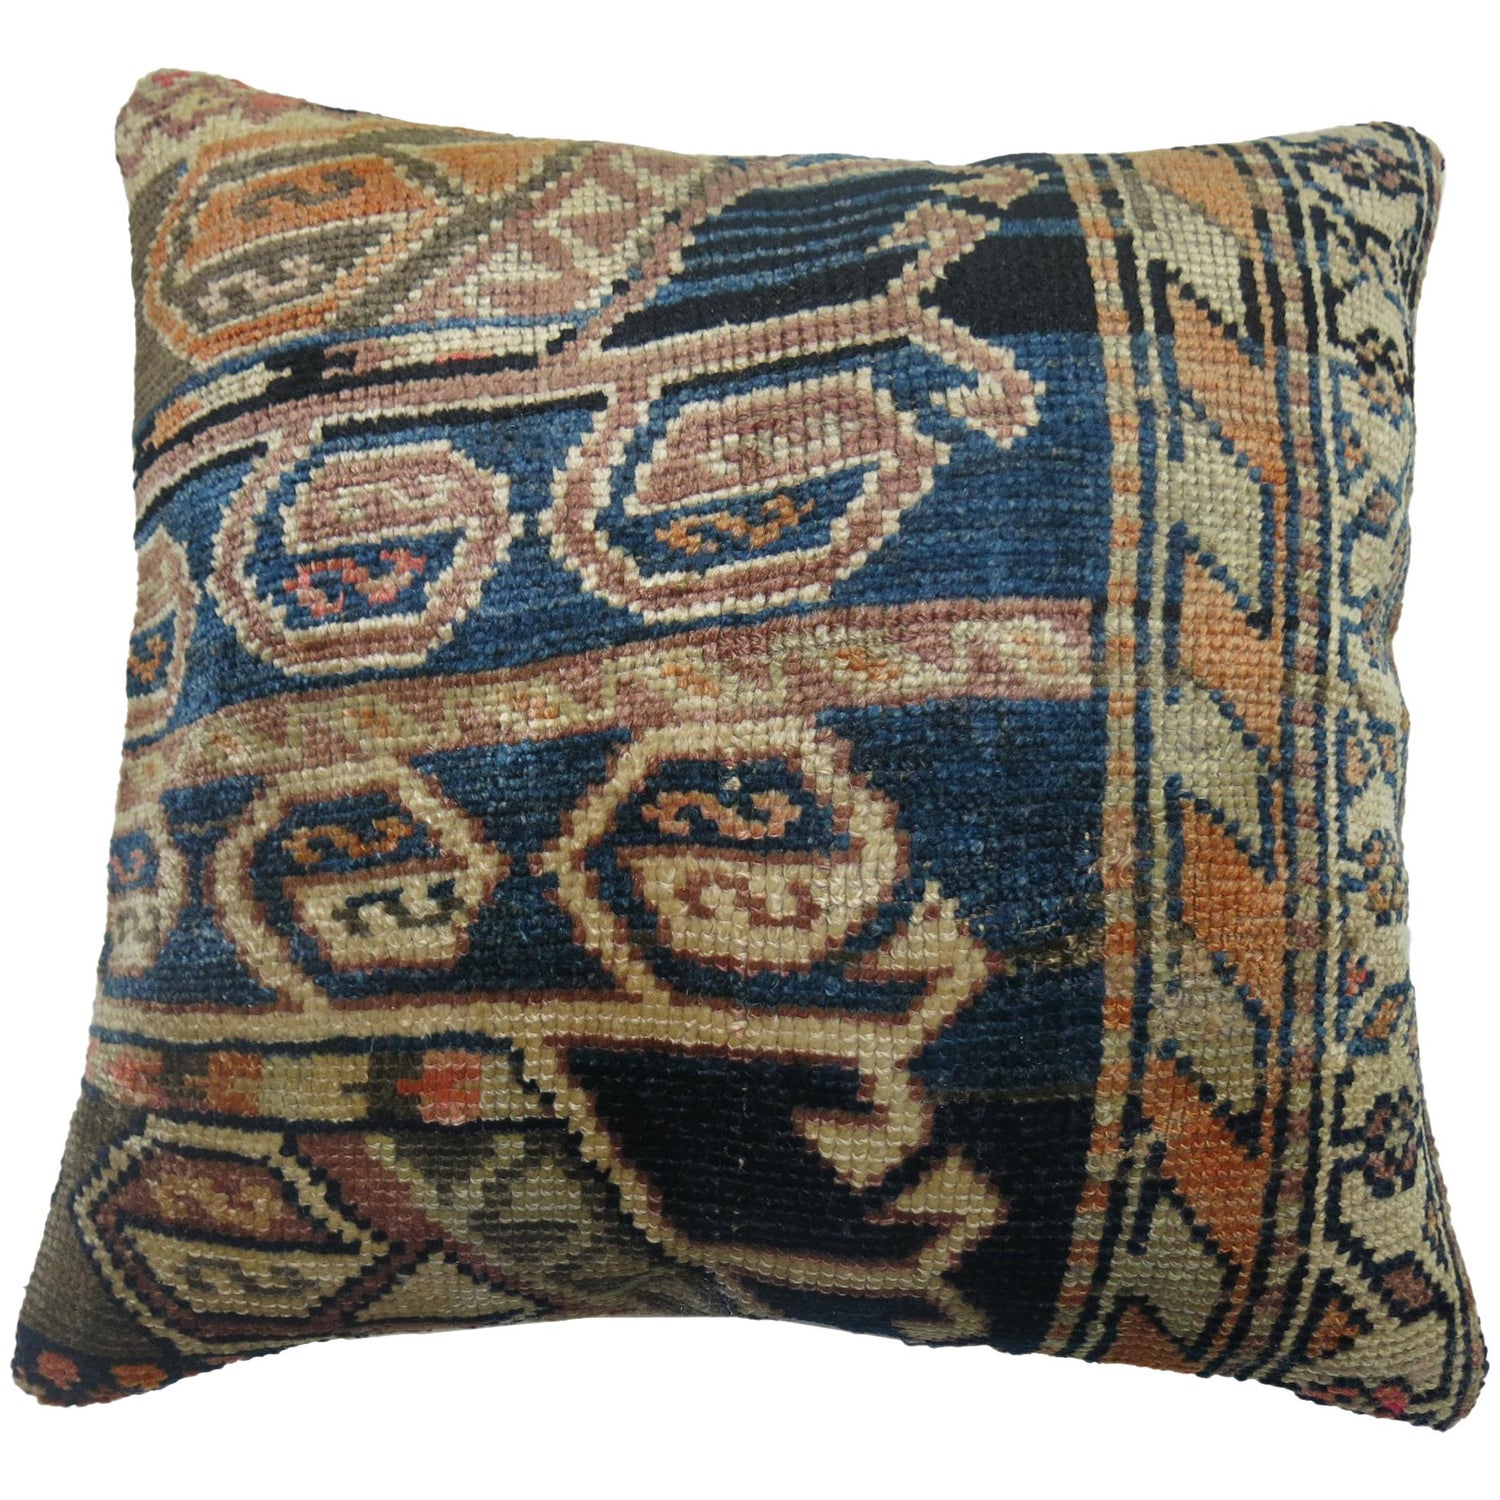 Antique Persian Blue Orange Accent, Persian Rug Pillow Covers